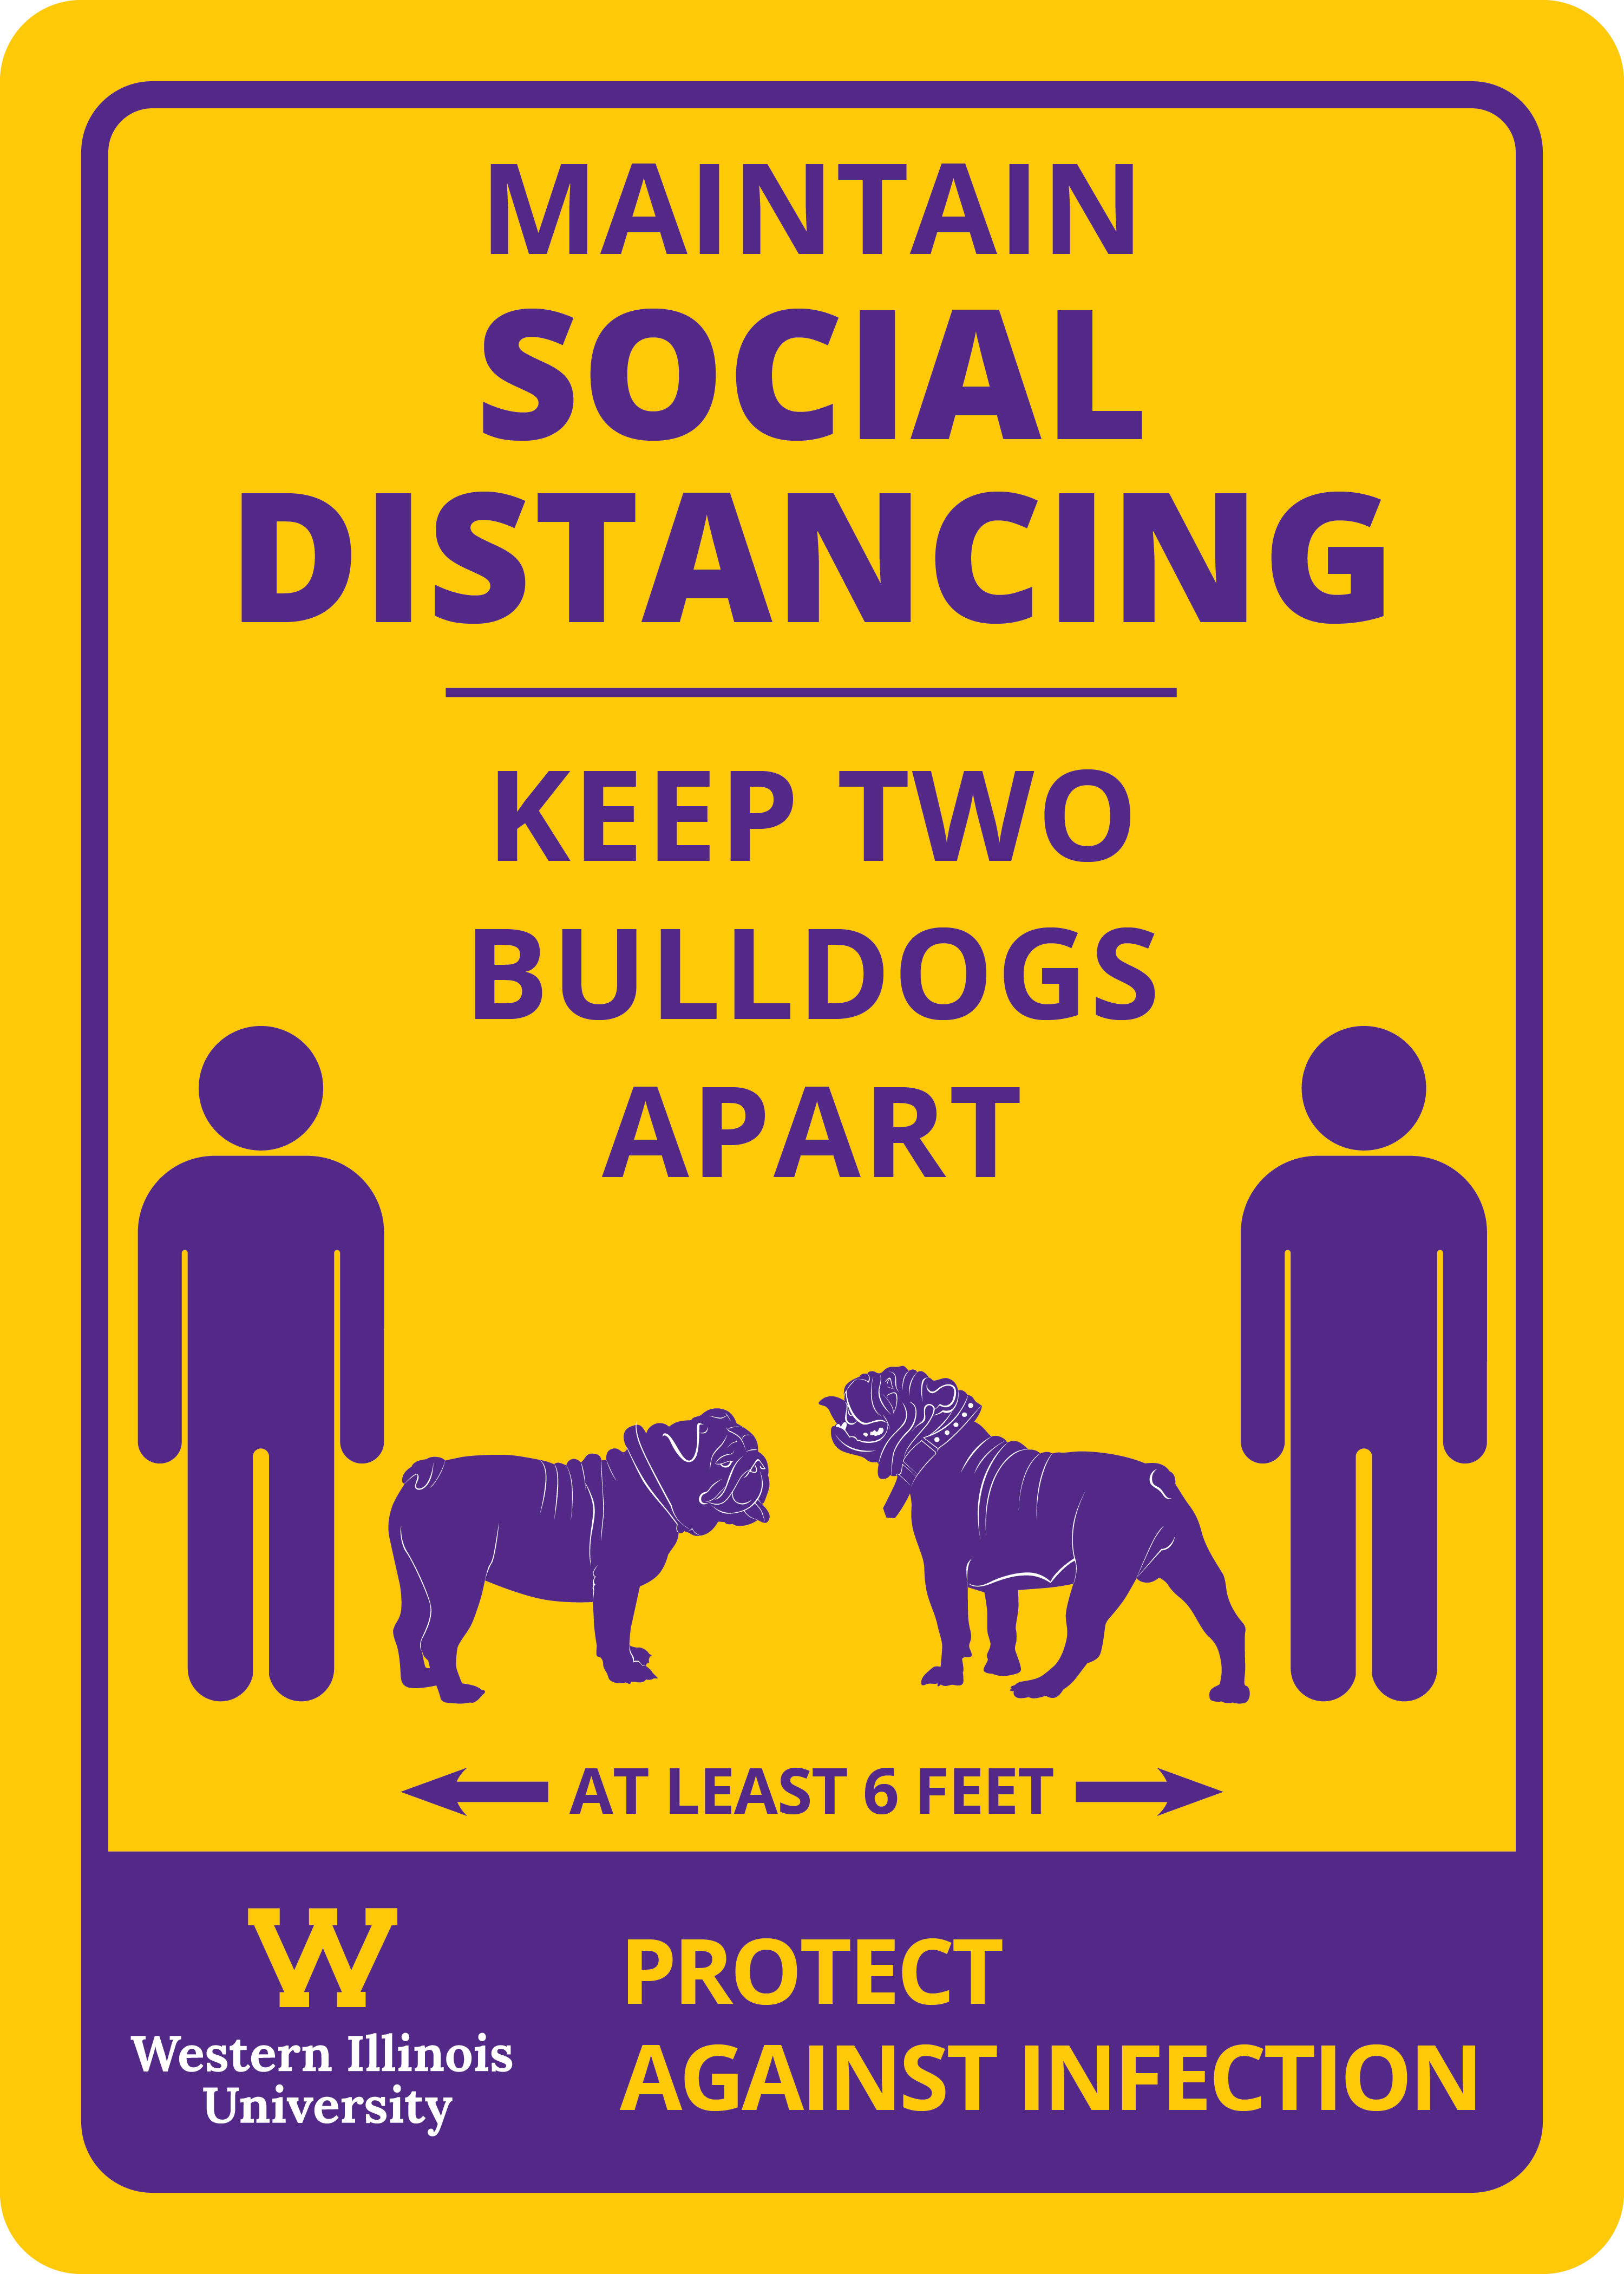 Social Distancing - two bulldogs apart